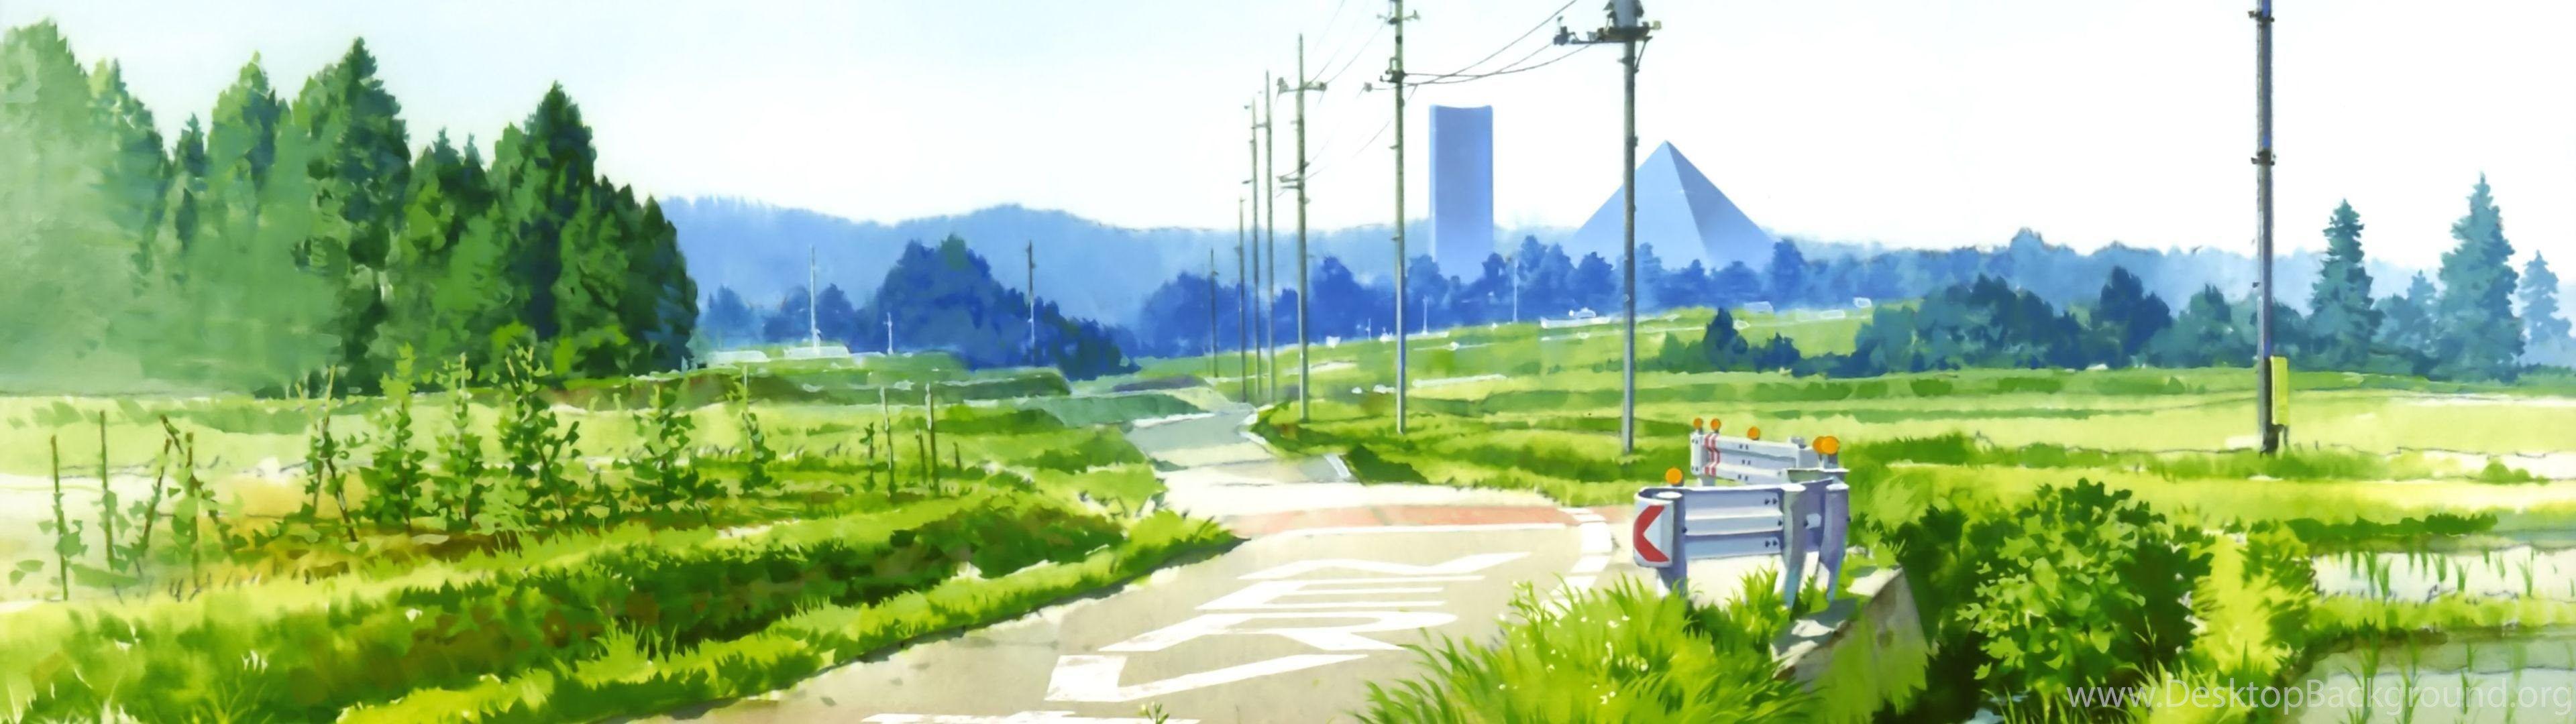 anime wallpaper dual monitor landscape